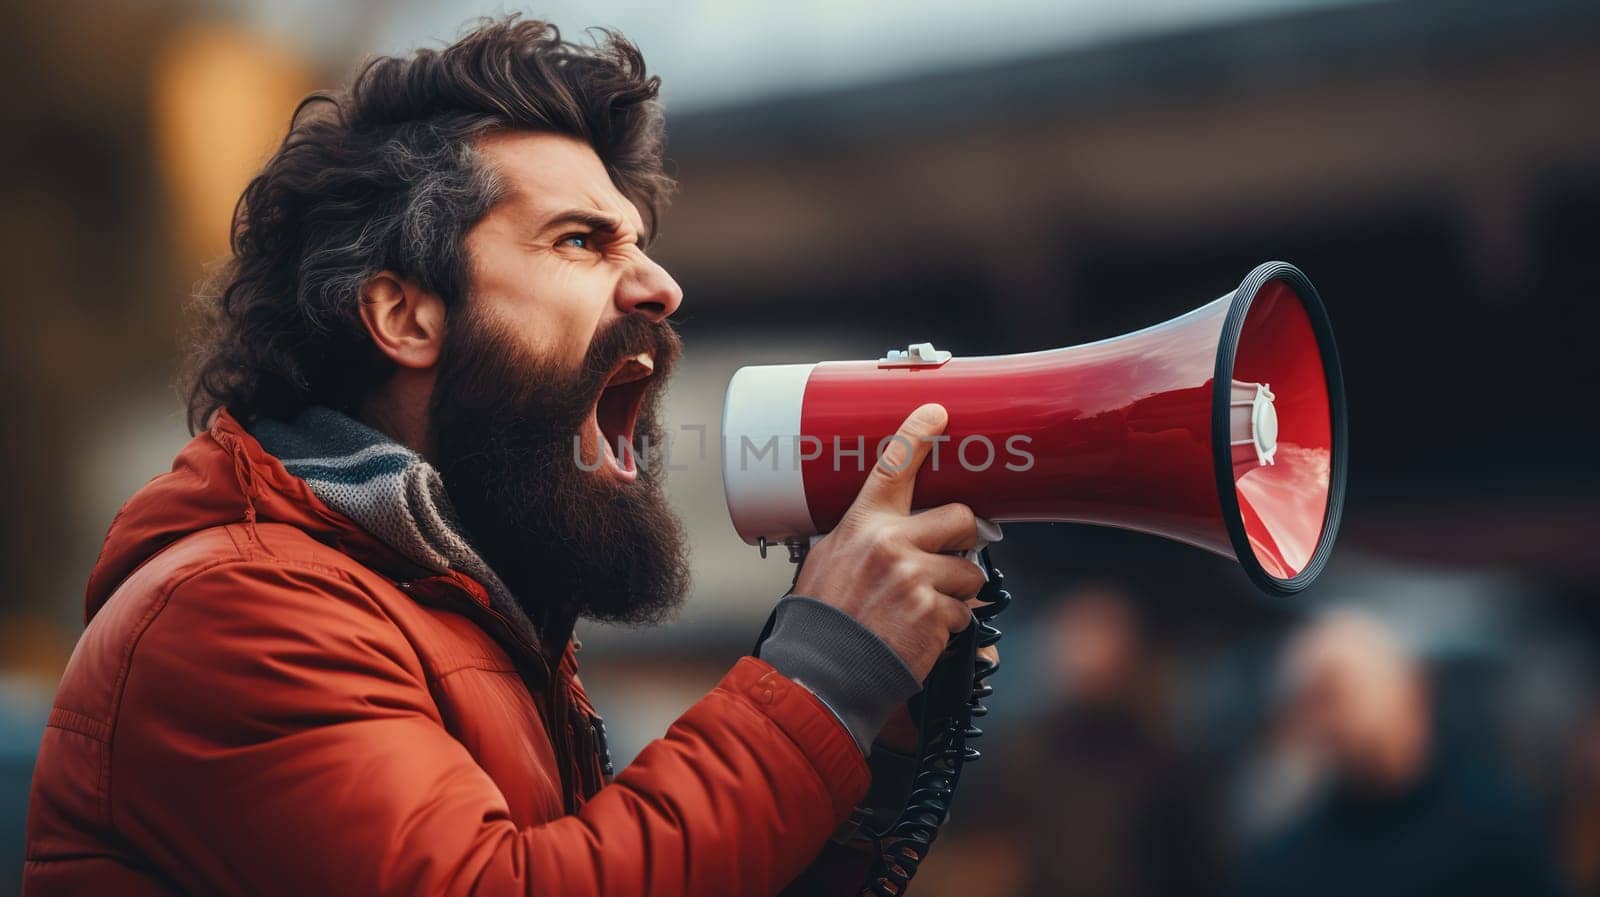 Big sale. Emotional portrait of marketing professional making big announcements on megaphone.